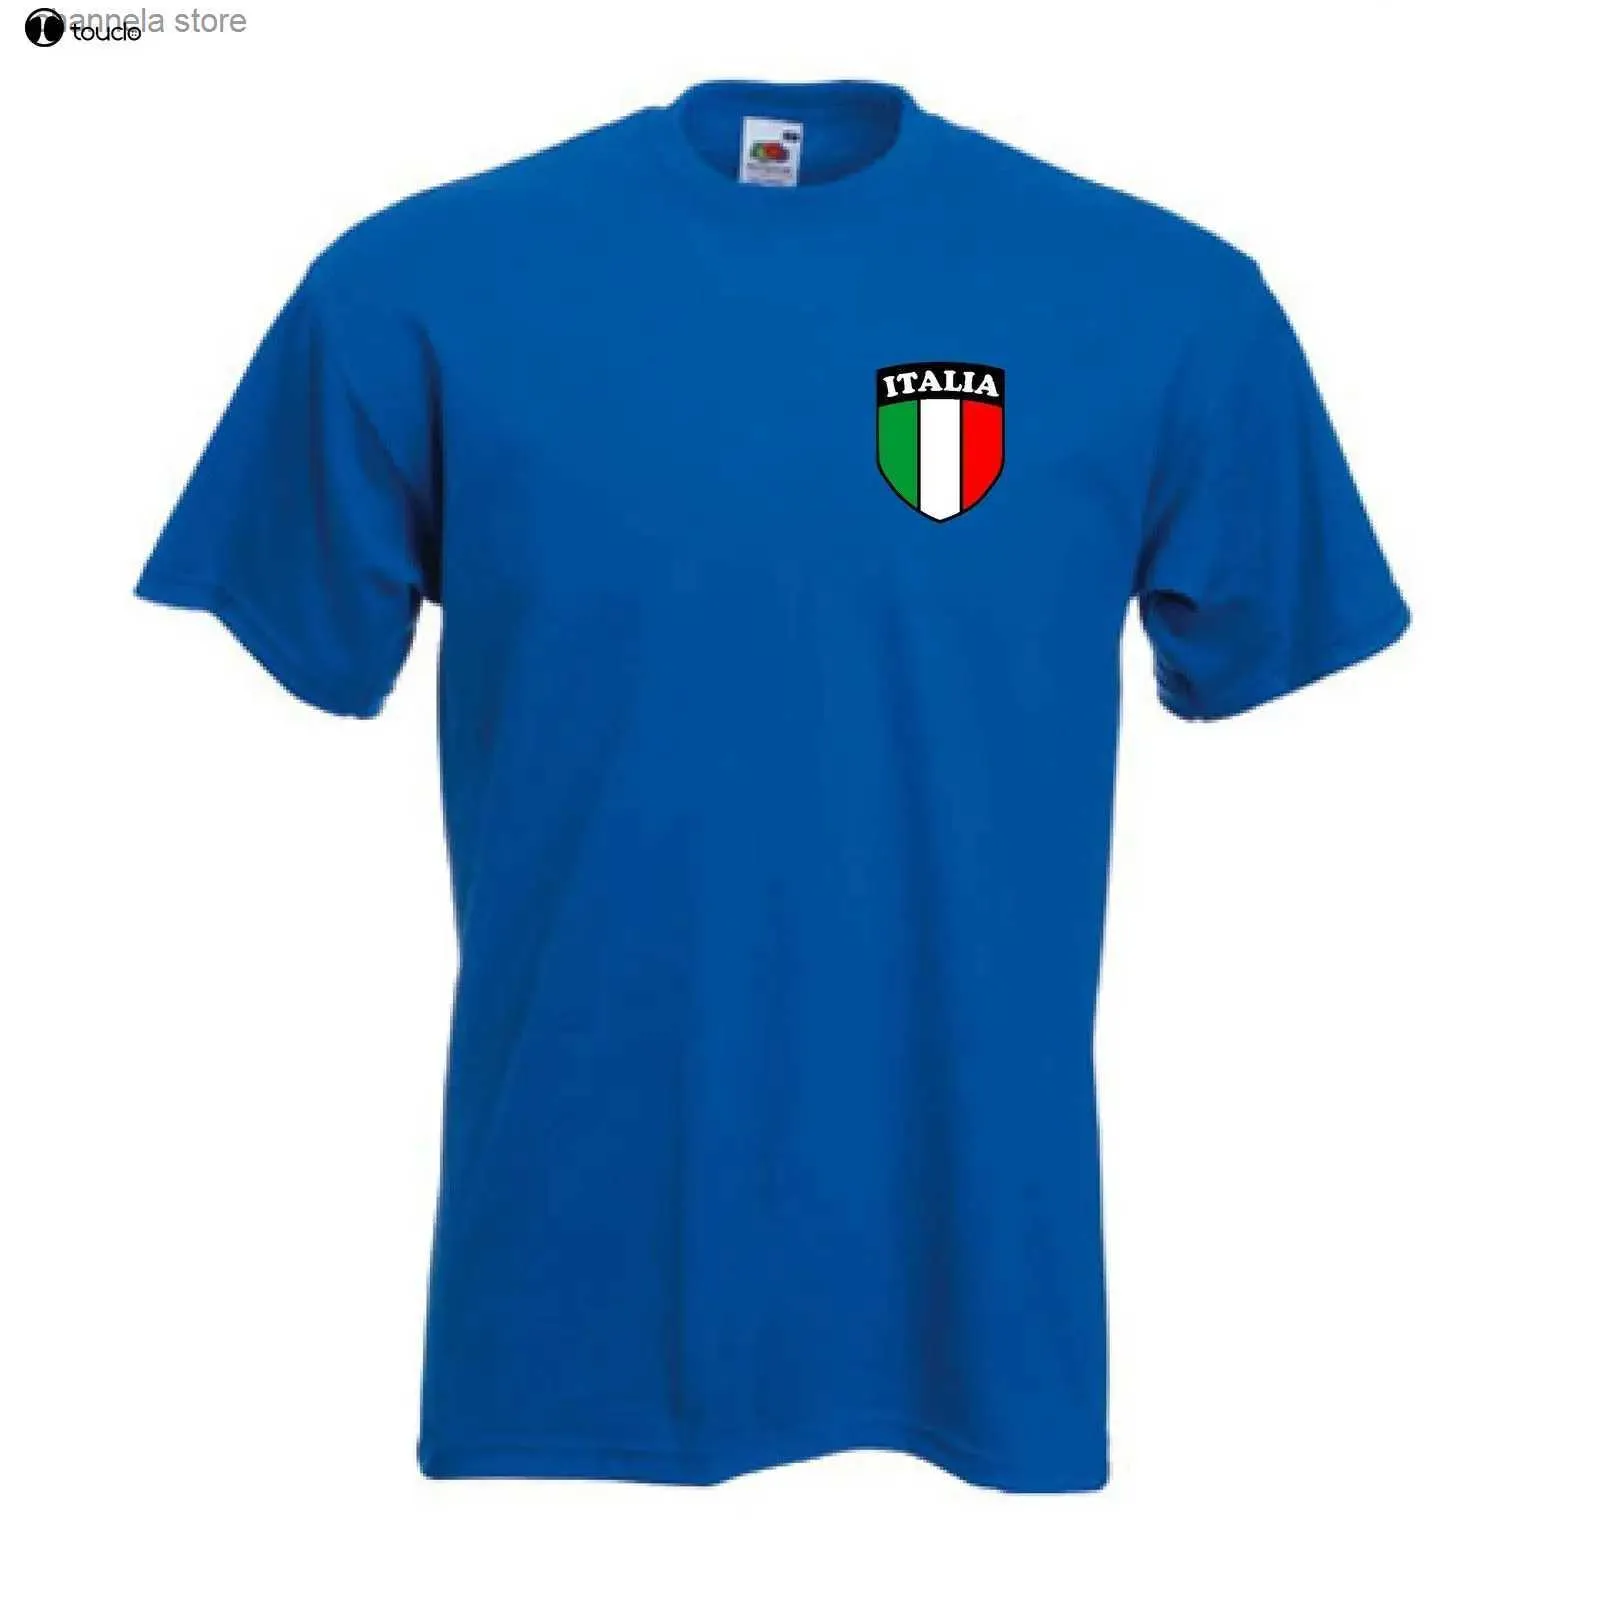 Mannen T-shirts Merk T-Shirt Mannen 2018 Mode Italië Italiaanse Italie Voetballer Team Koninklijke T-Shirt Print T-Shirt Mannen Harajuku T240227